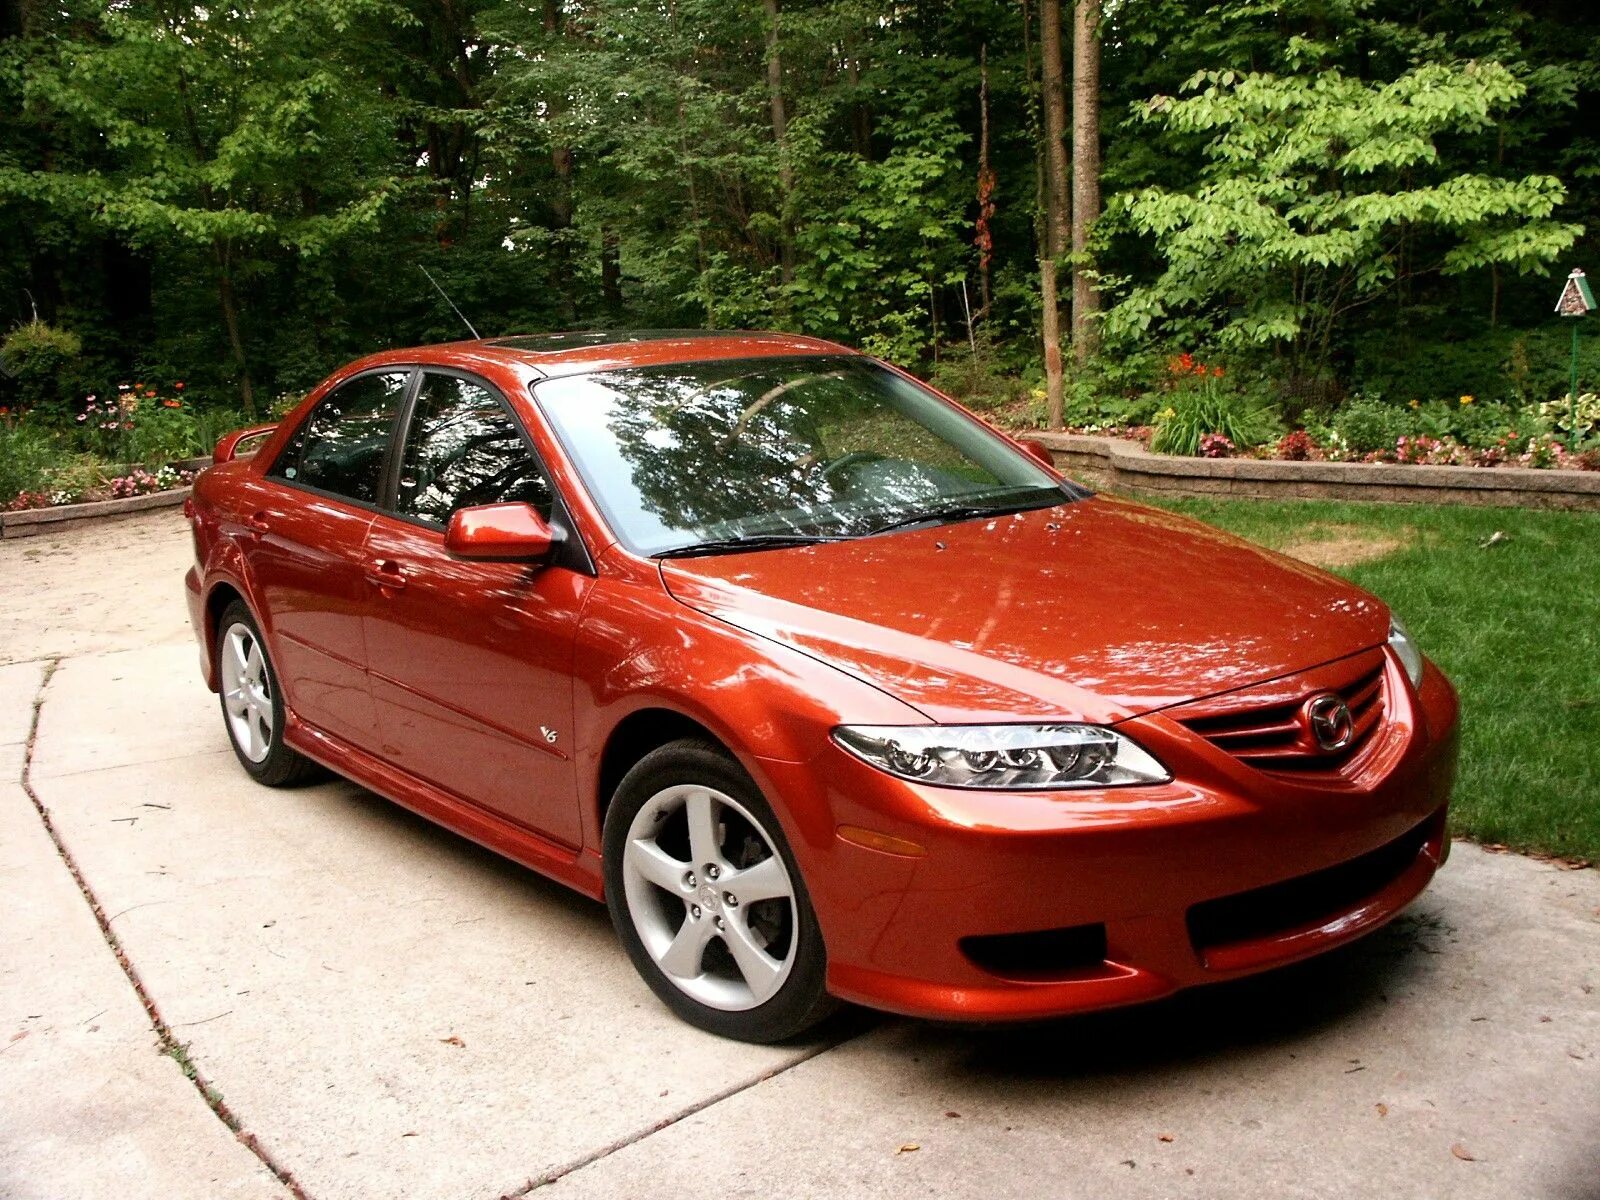 Мазда 6 2005г. Mazda Mazda 6 2005. Mazda 6 gg 2005. Красная Мазда 6 gg 2005. Mazda 6 gg красная.